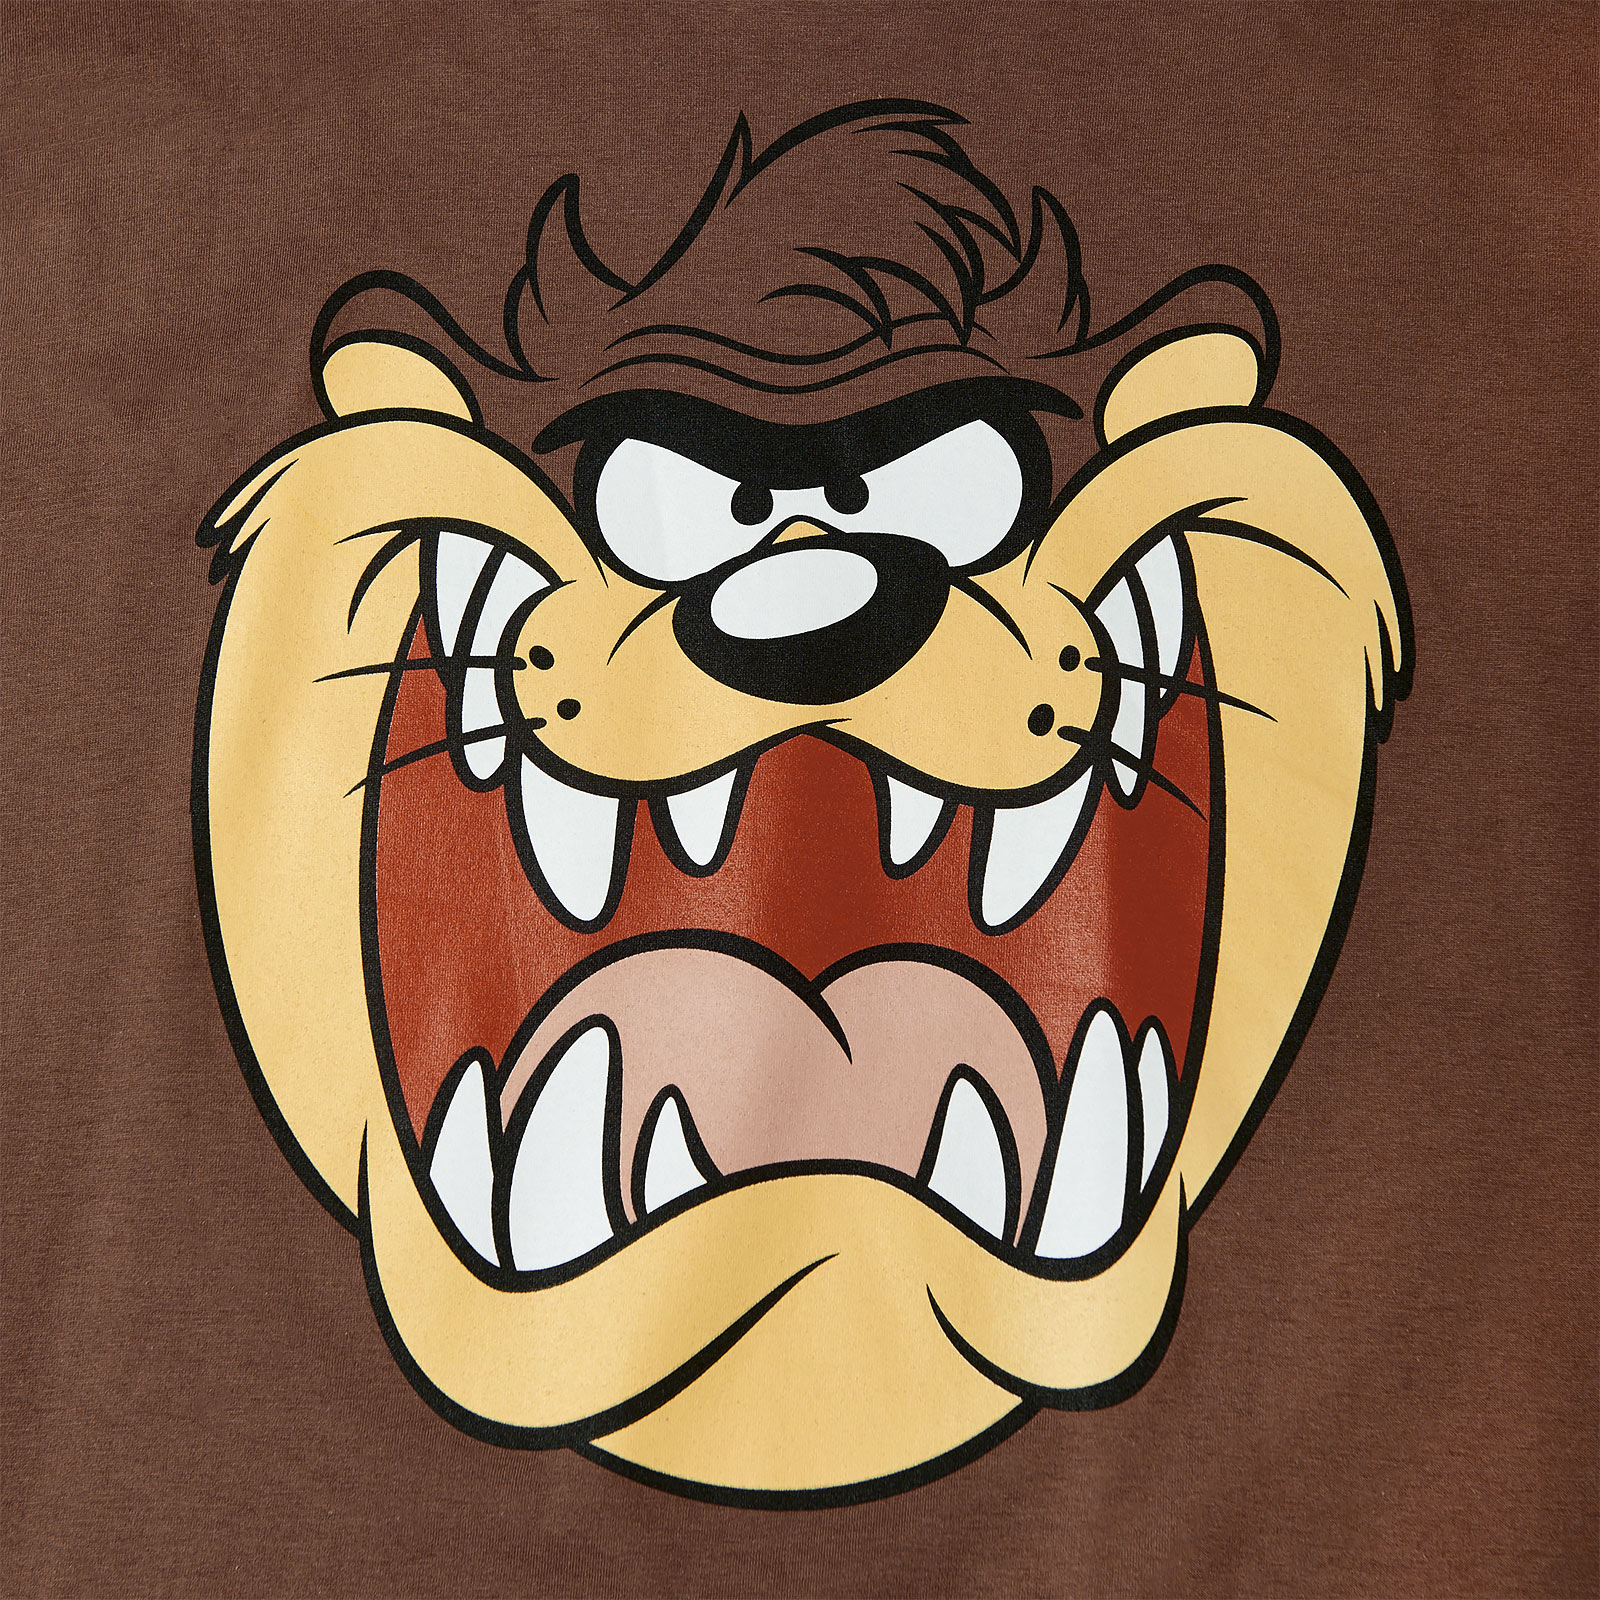 Looney Tunes - Taz Face T-Shirt bruin